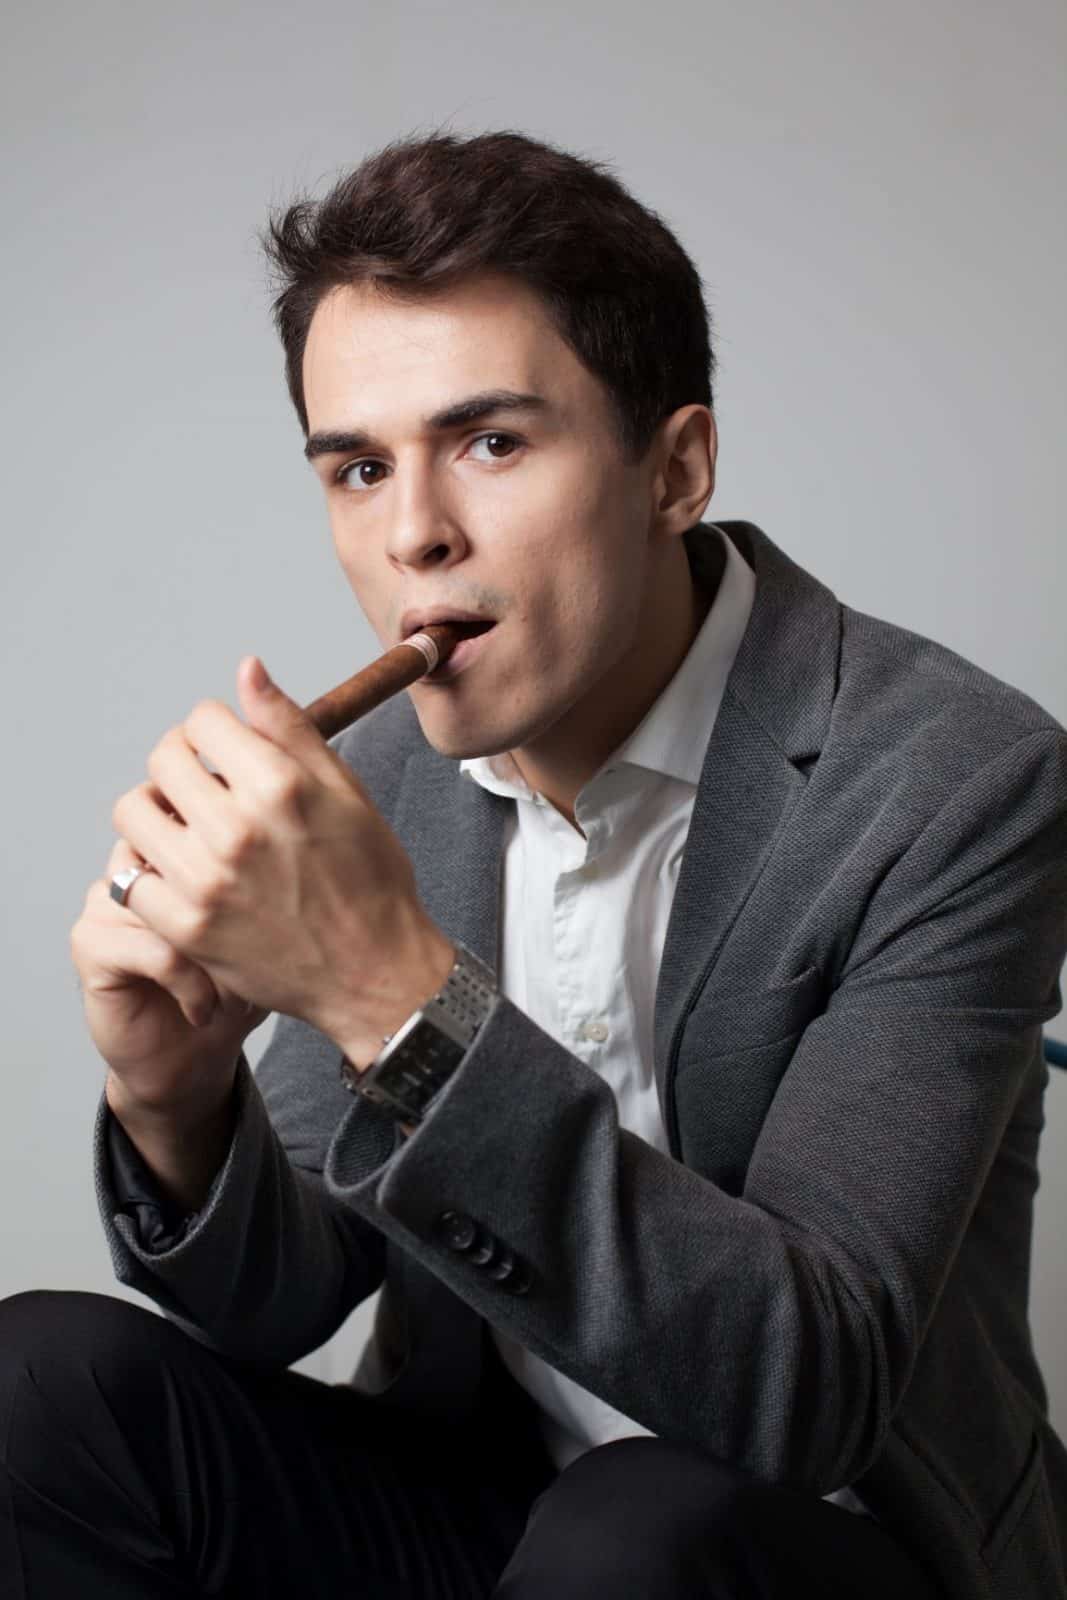 A man lighting a cigar practices common cigar etiquette.